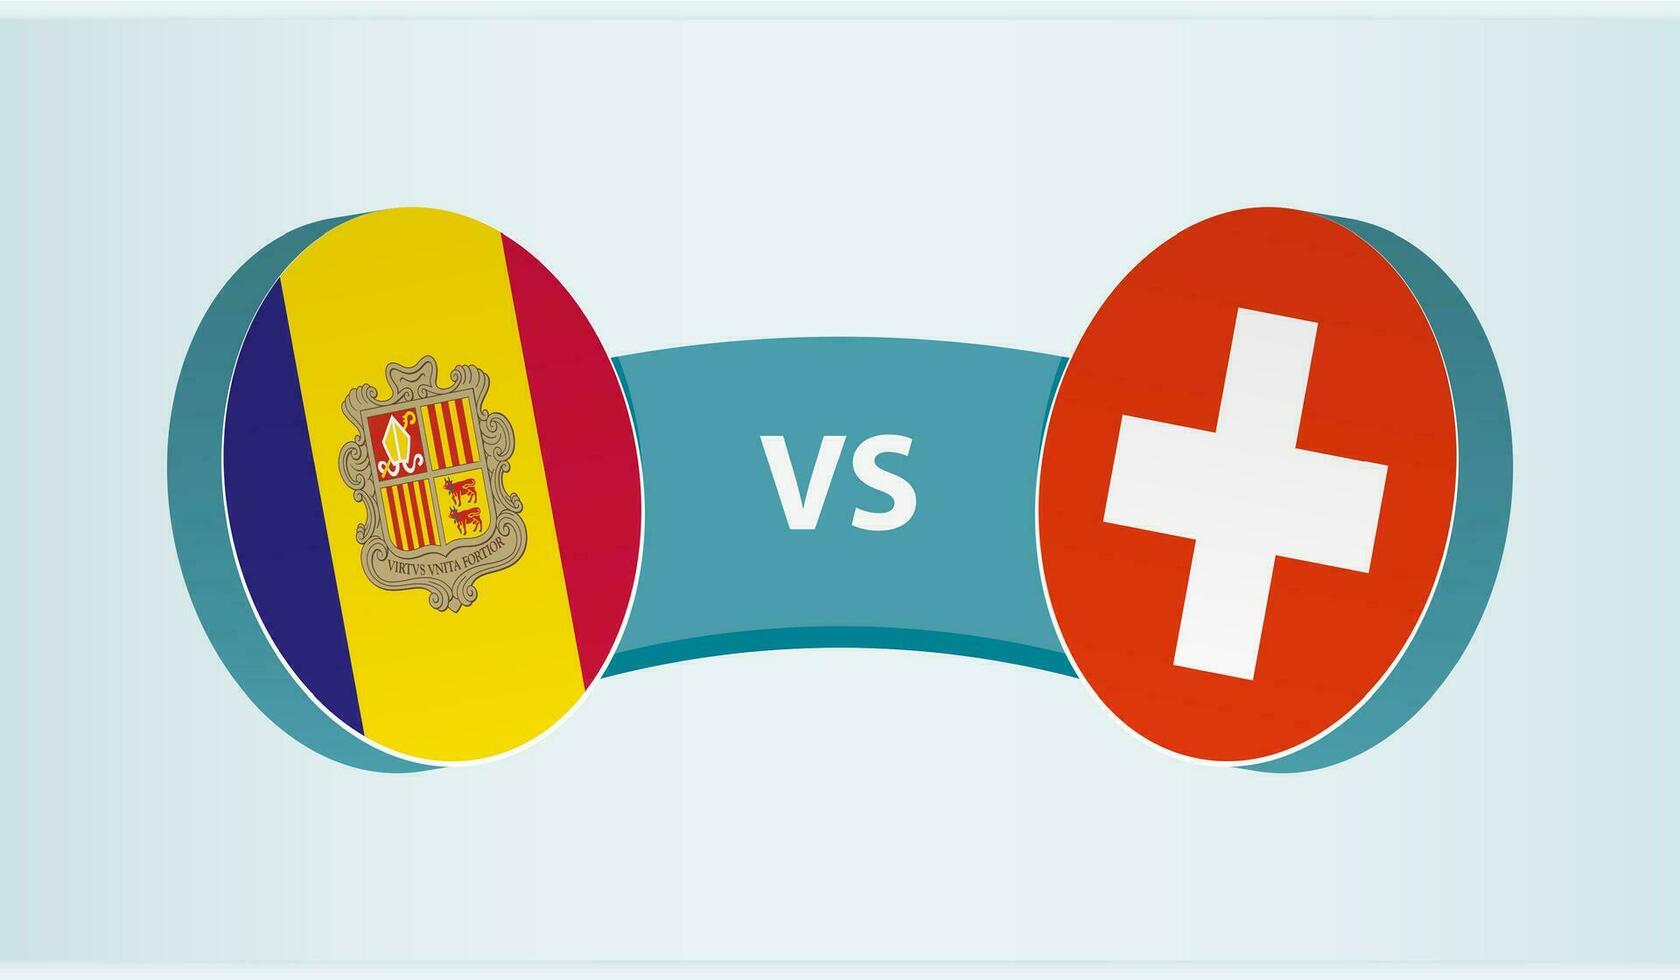 Andorra versus Switzerland, team sports competition concept. vector